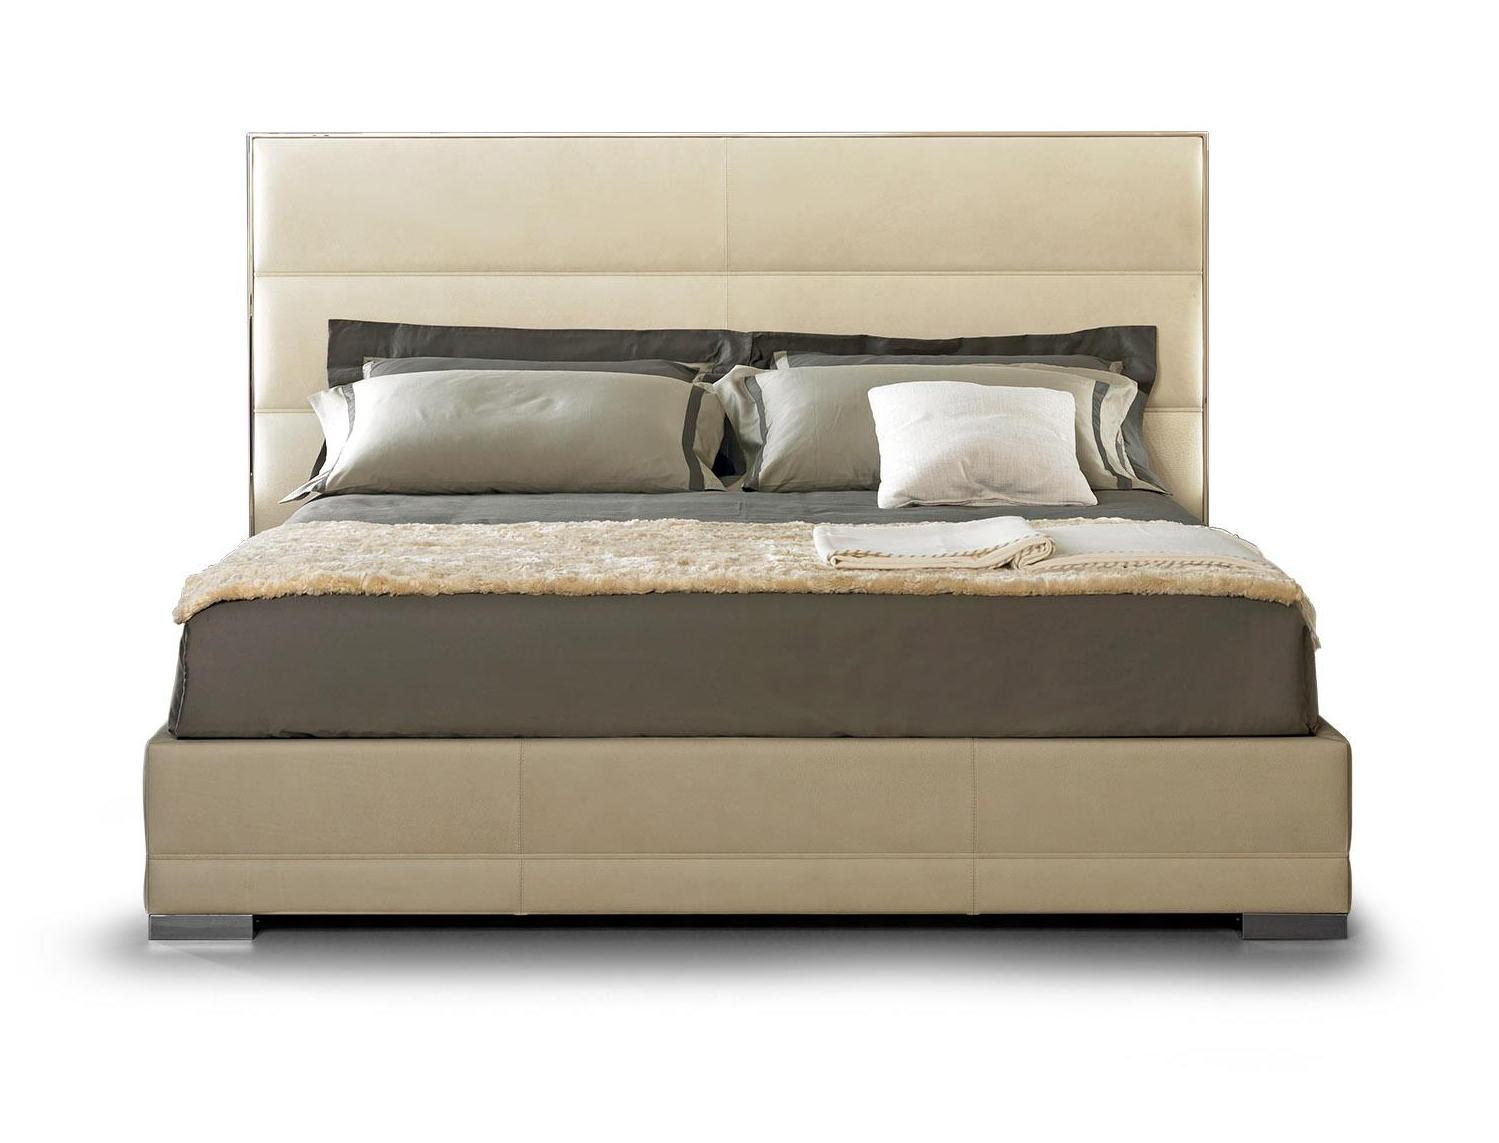 Italian Luxury Bed with Headboard